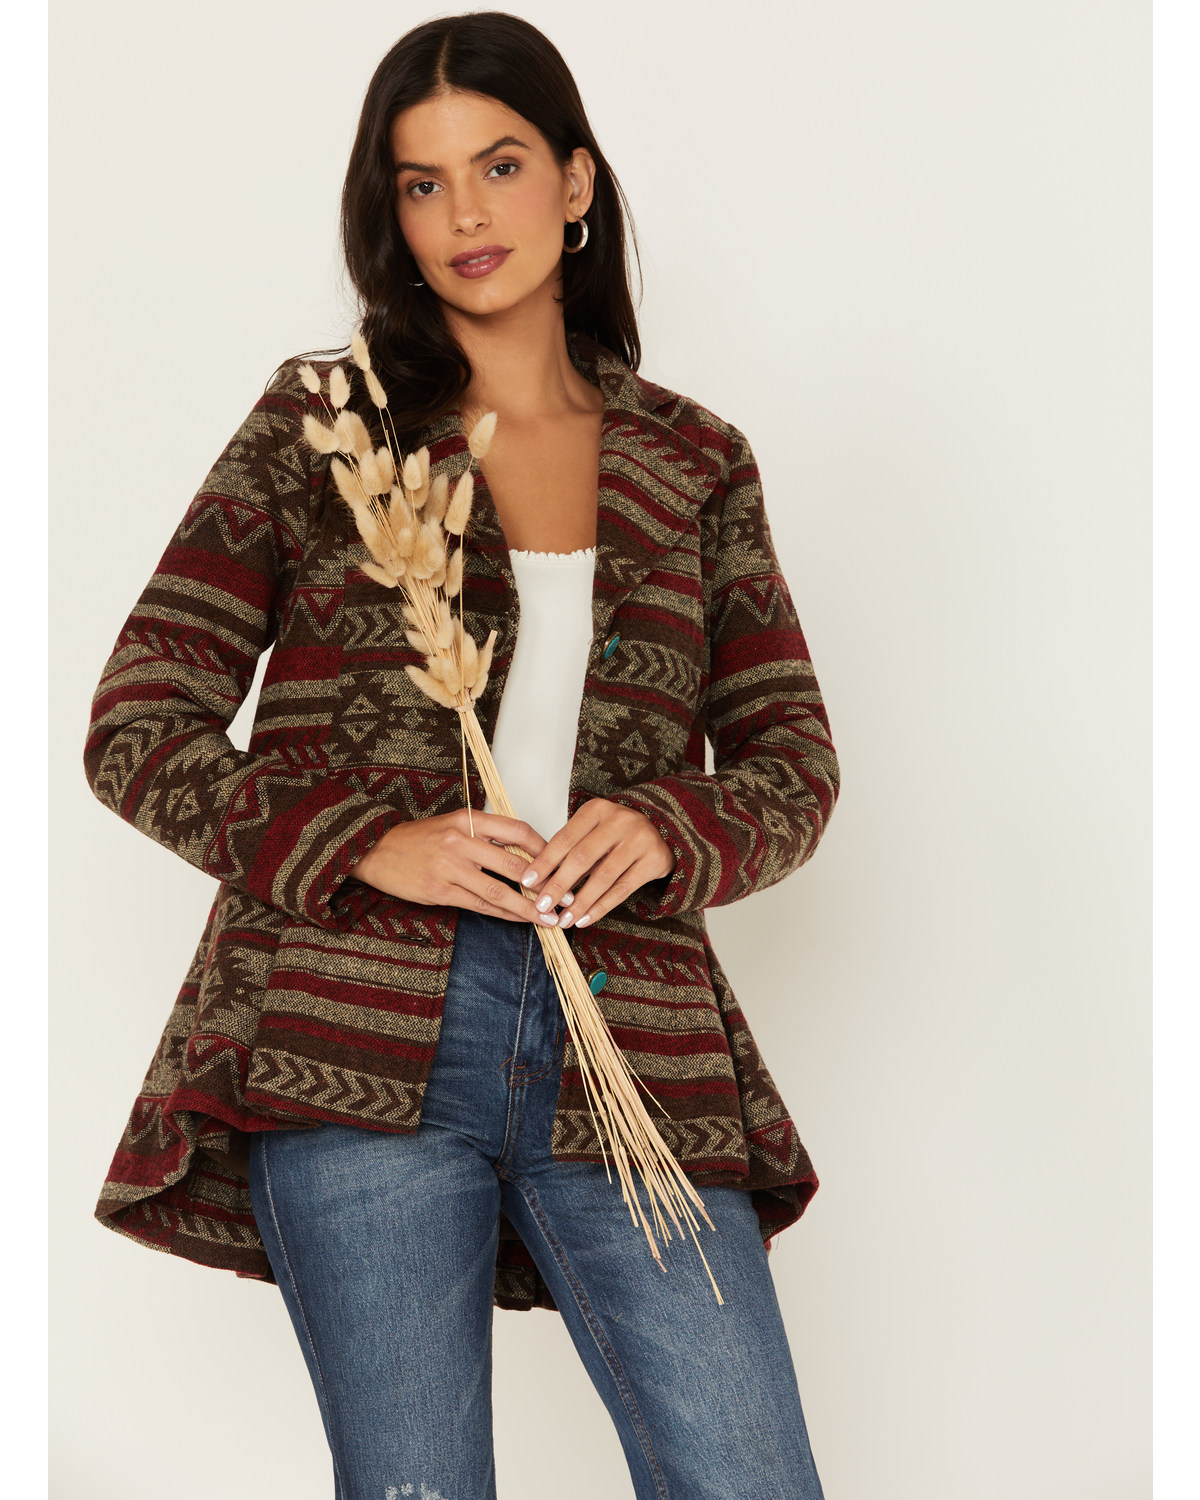 Outback Trading Co. Women's Southwestern Stripe Print Blaire Jacket